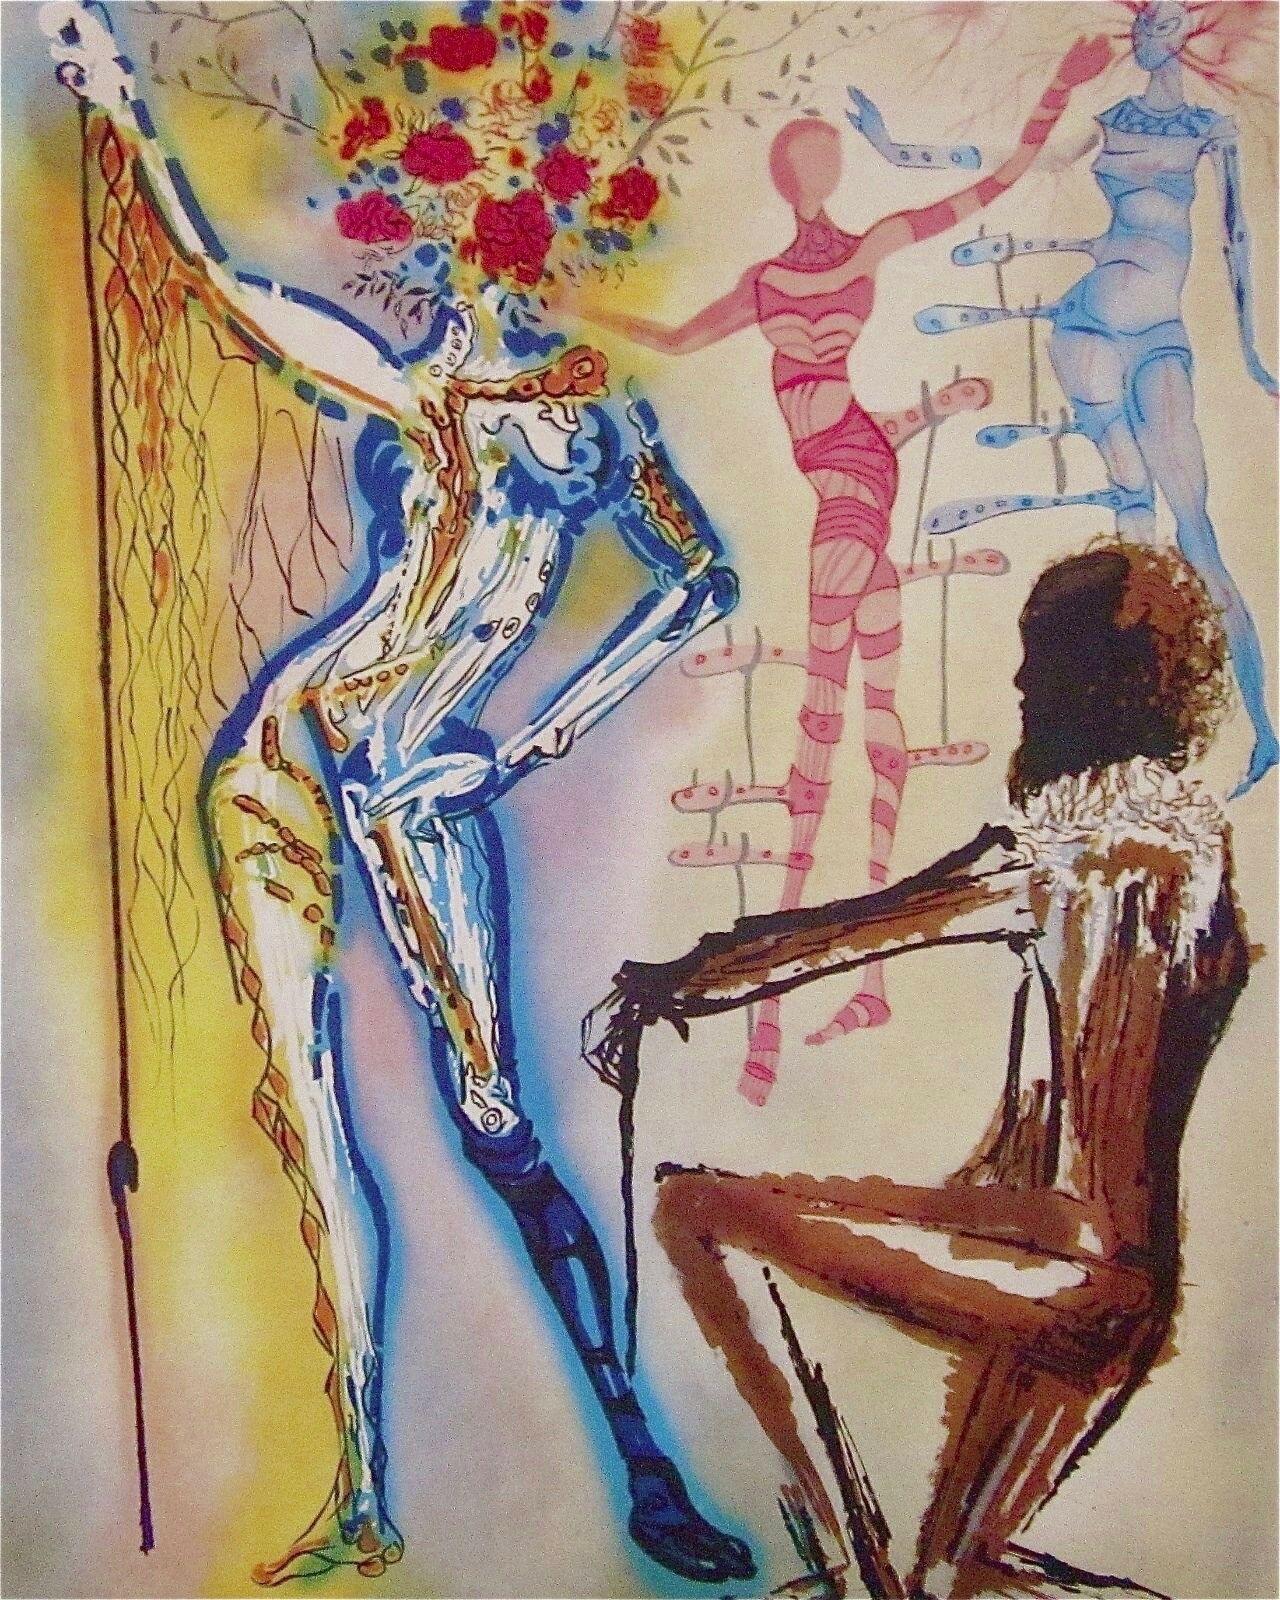 Salvador Dalí Landscape Print - The Ballet of the Flowers 1989 Limited Edition Litho Salvador Dali -1st Edition